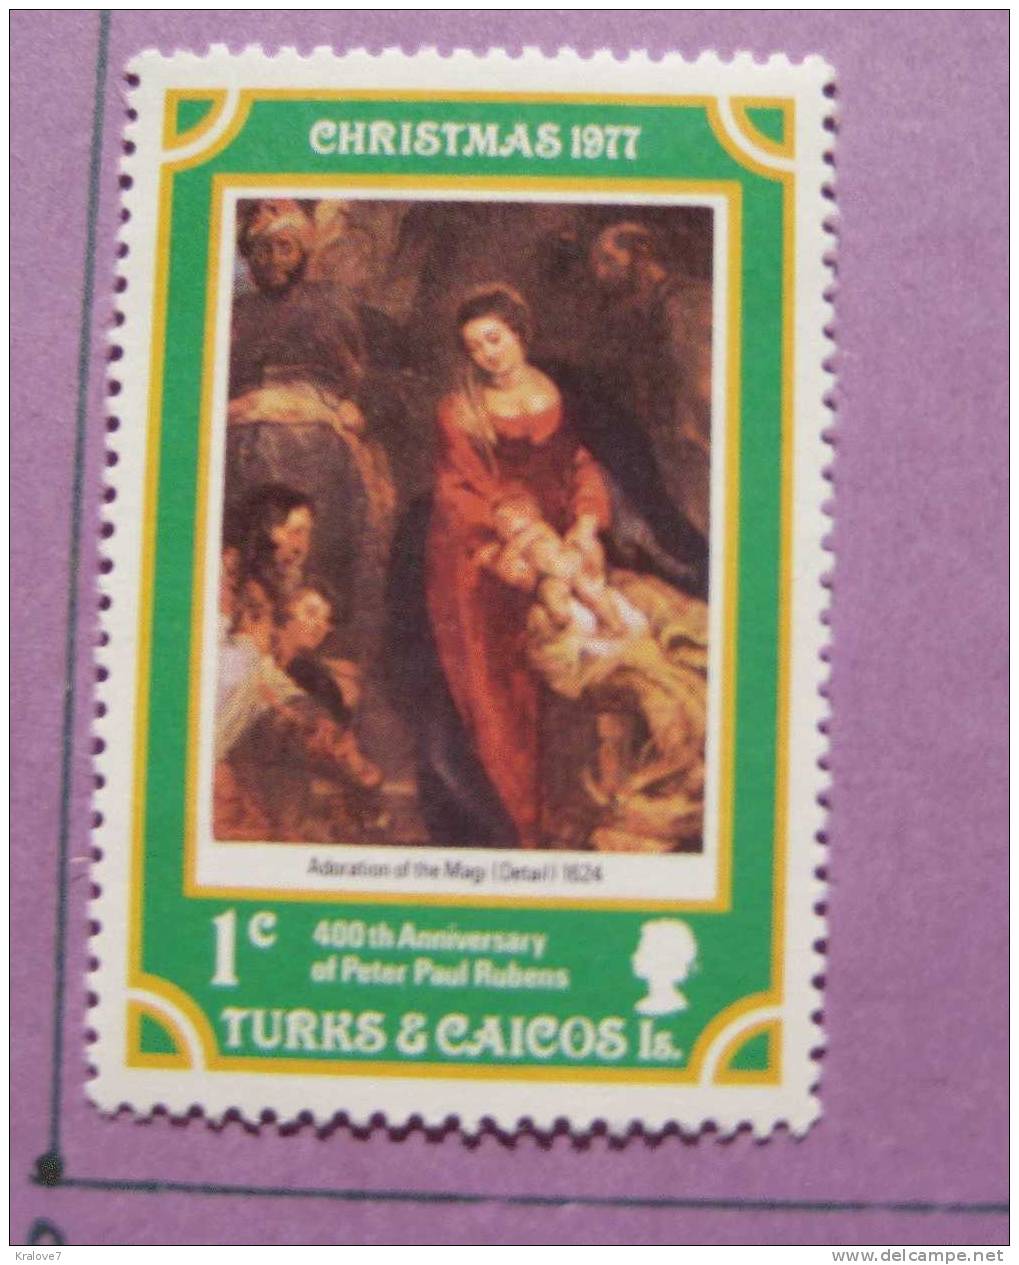 TURKS CAICOS. 2 TIMBRES. NEUF. NOEL HUMAN RIGHTS. RELIGION 1977-1968 CHRISTMAS RELIGIONS NAVIDAD - Turks & Caicos